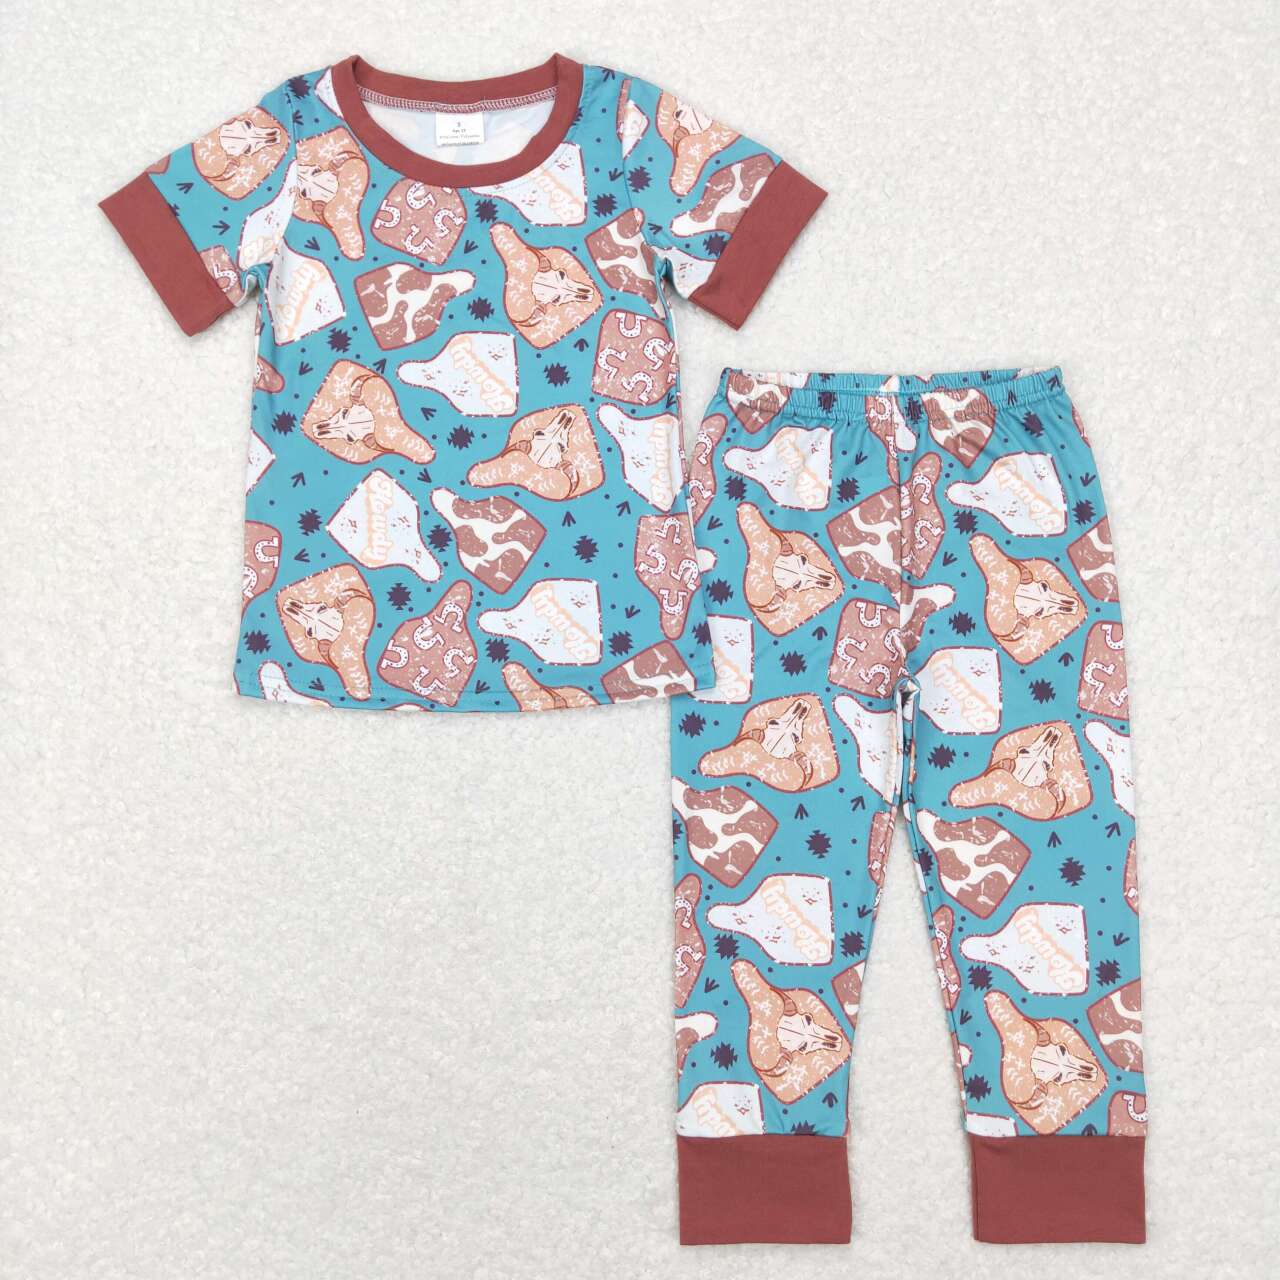 BSPO0238 baby boy clothes highland cow boy spring outfit toddler fall pajamas set